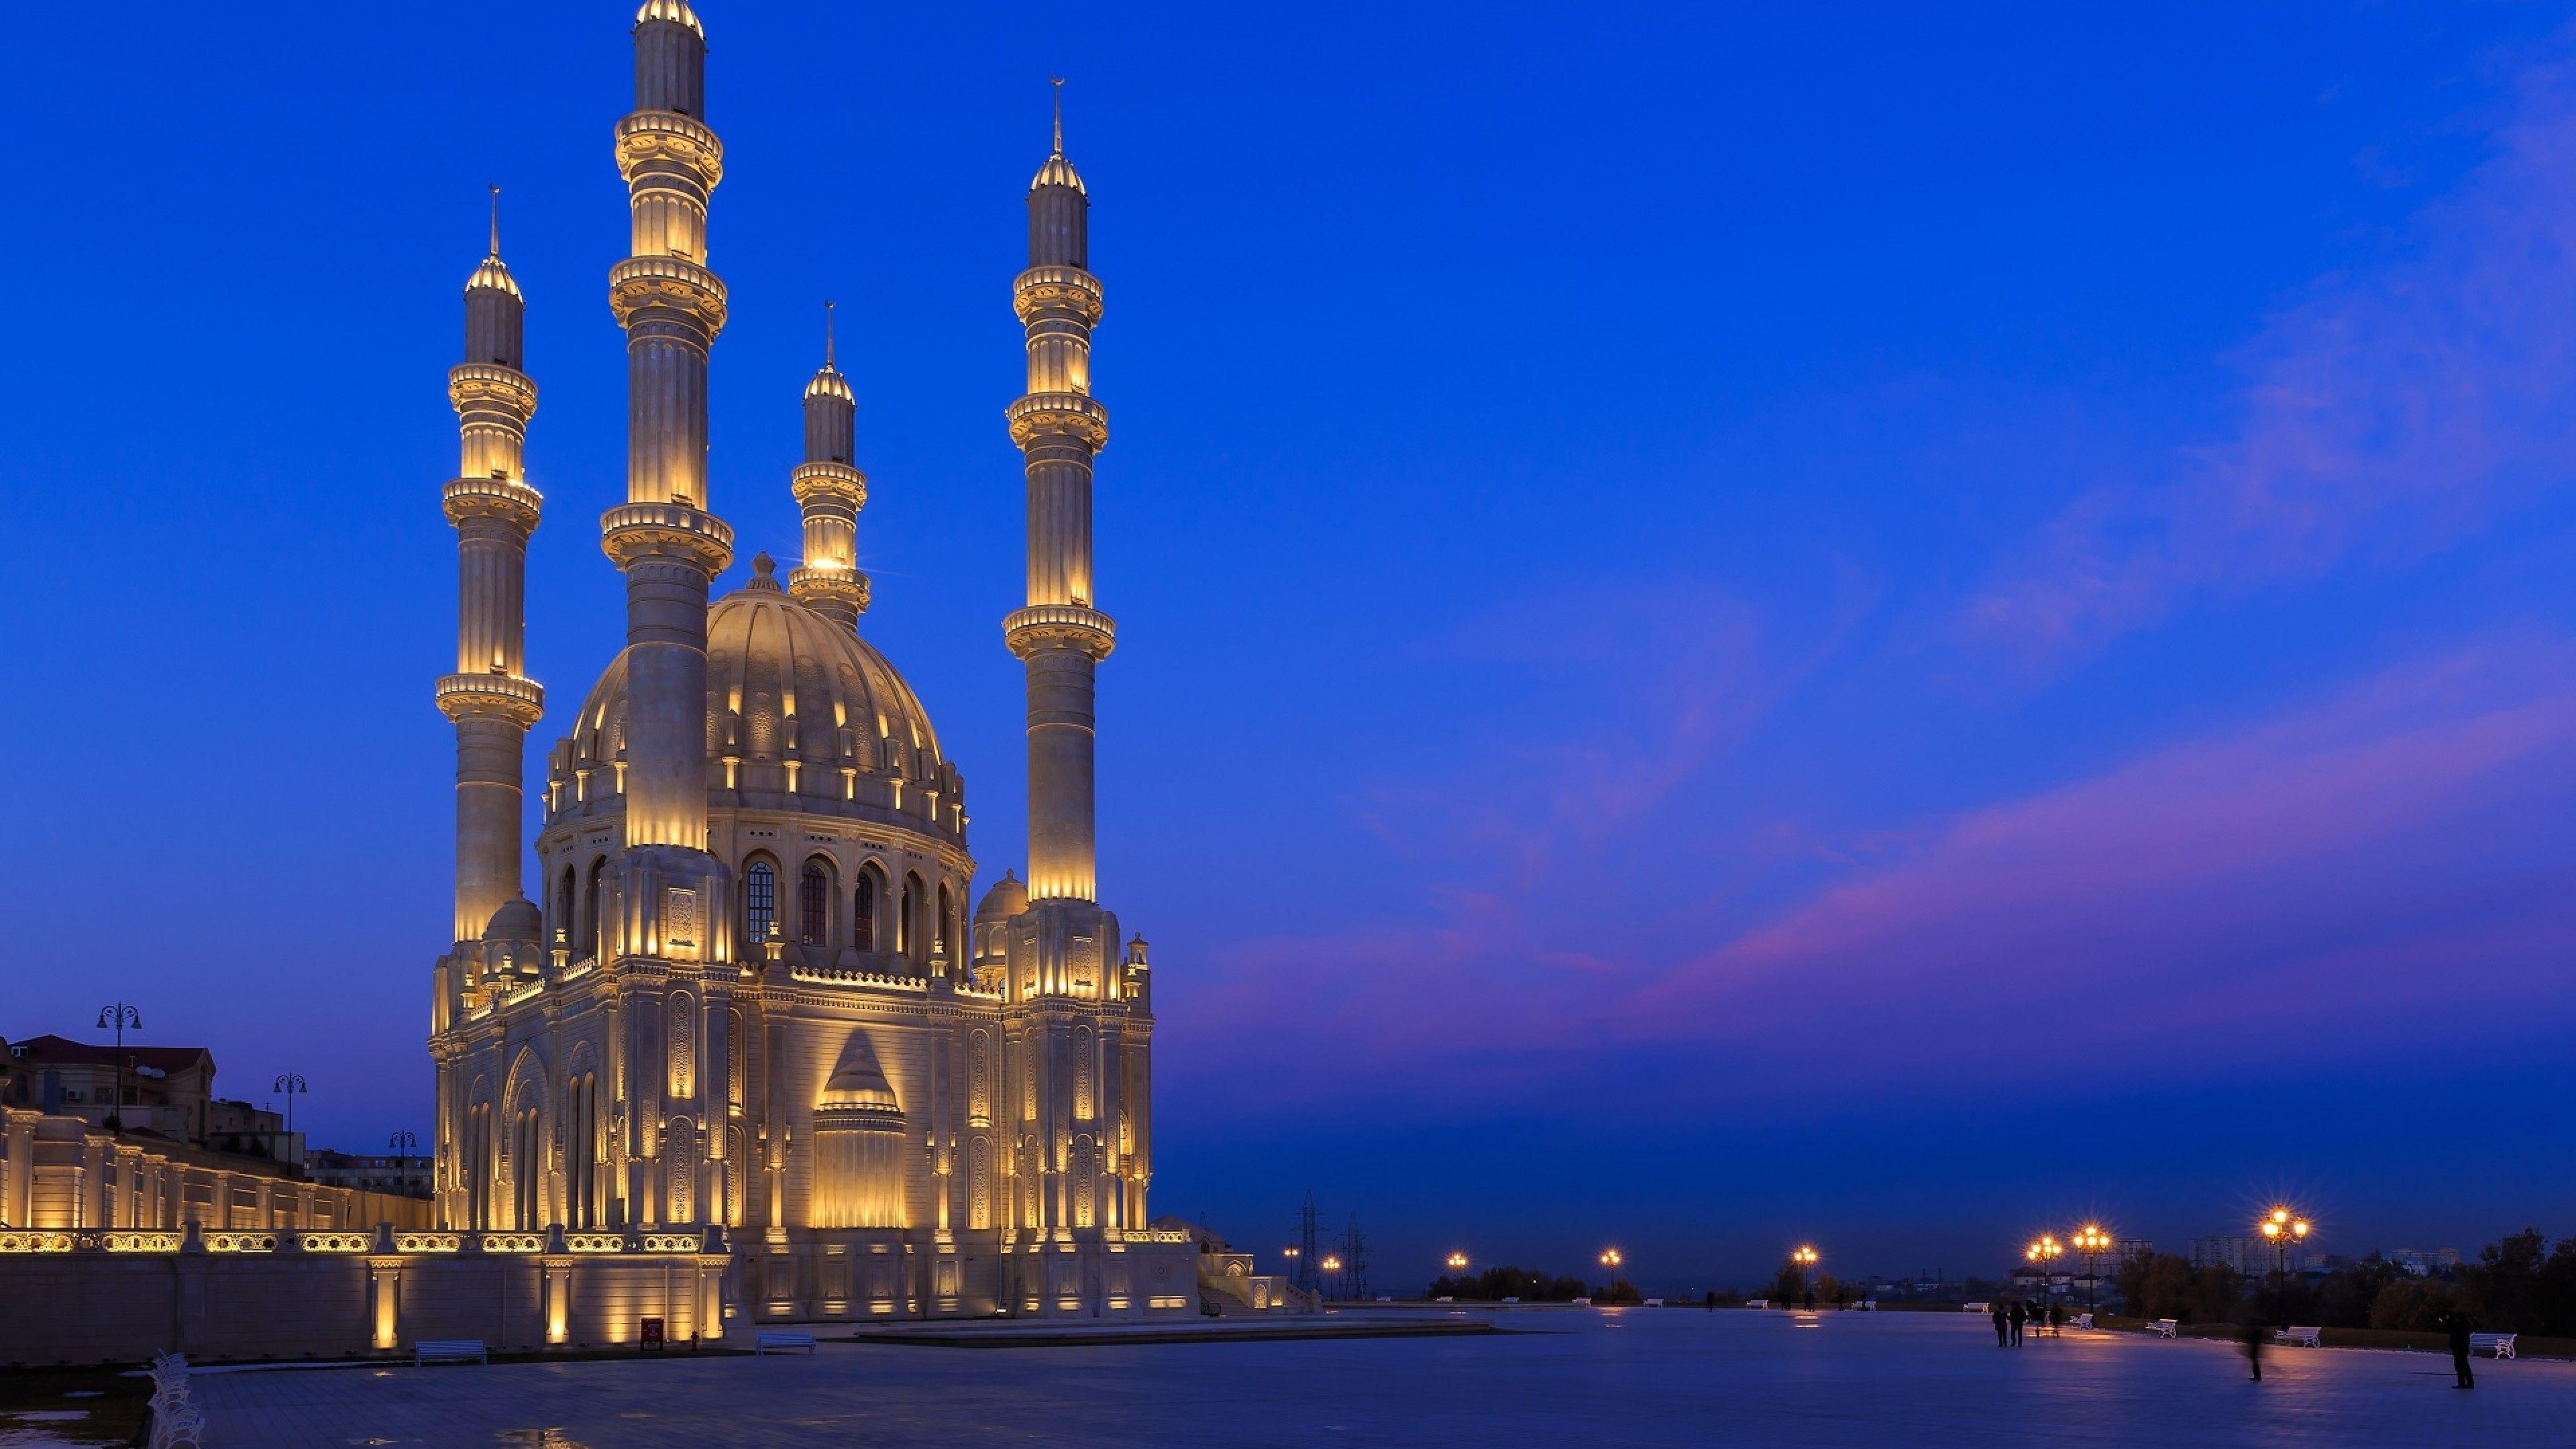 Download 3840x2160 Heydar Mosque, Azerbaijan Baku, Lights, Night